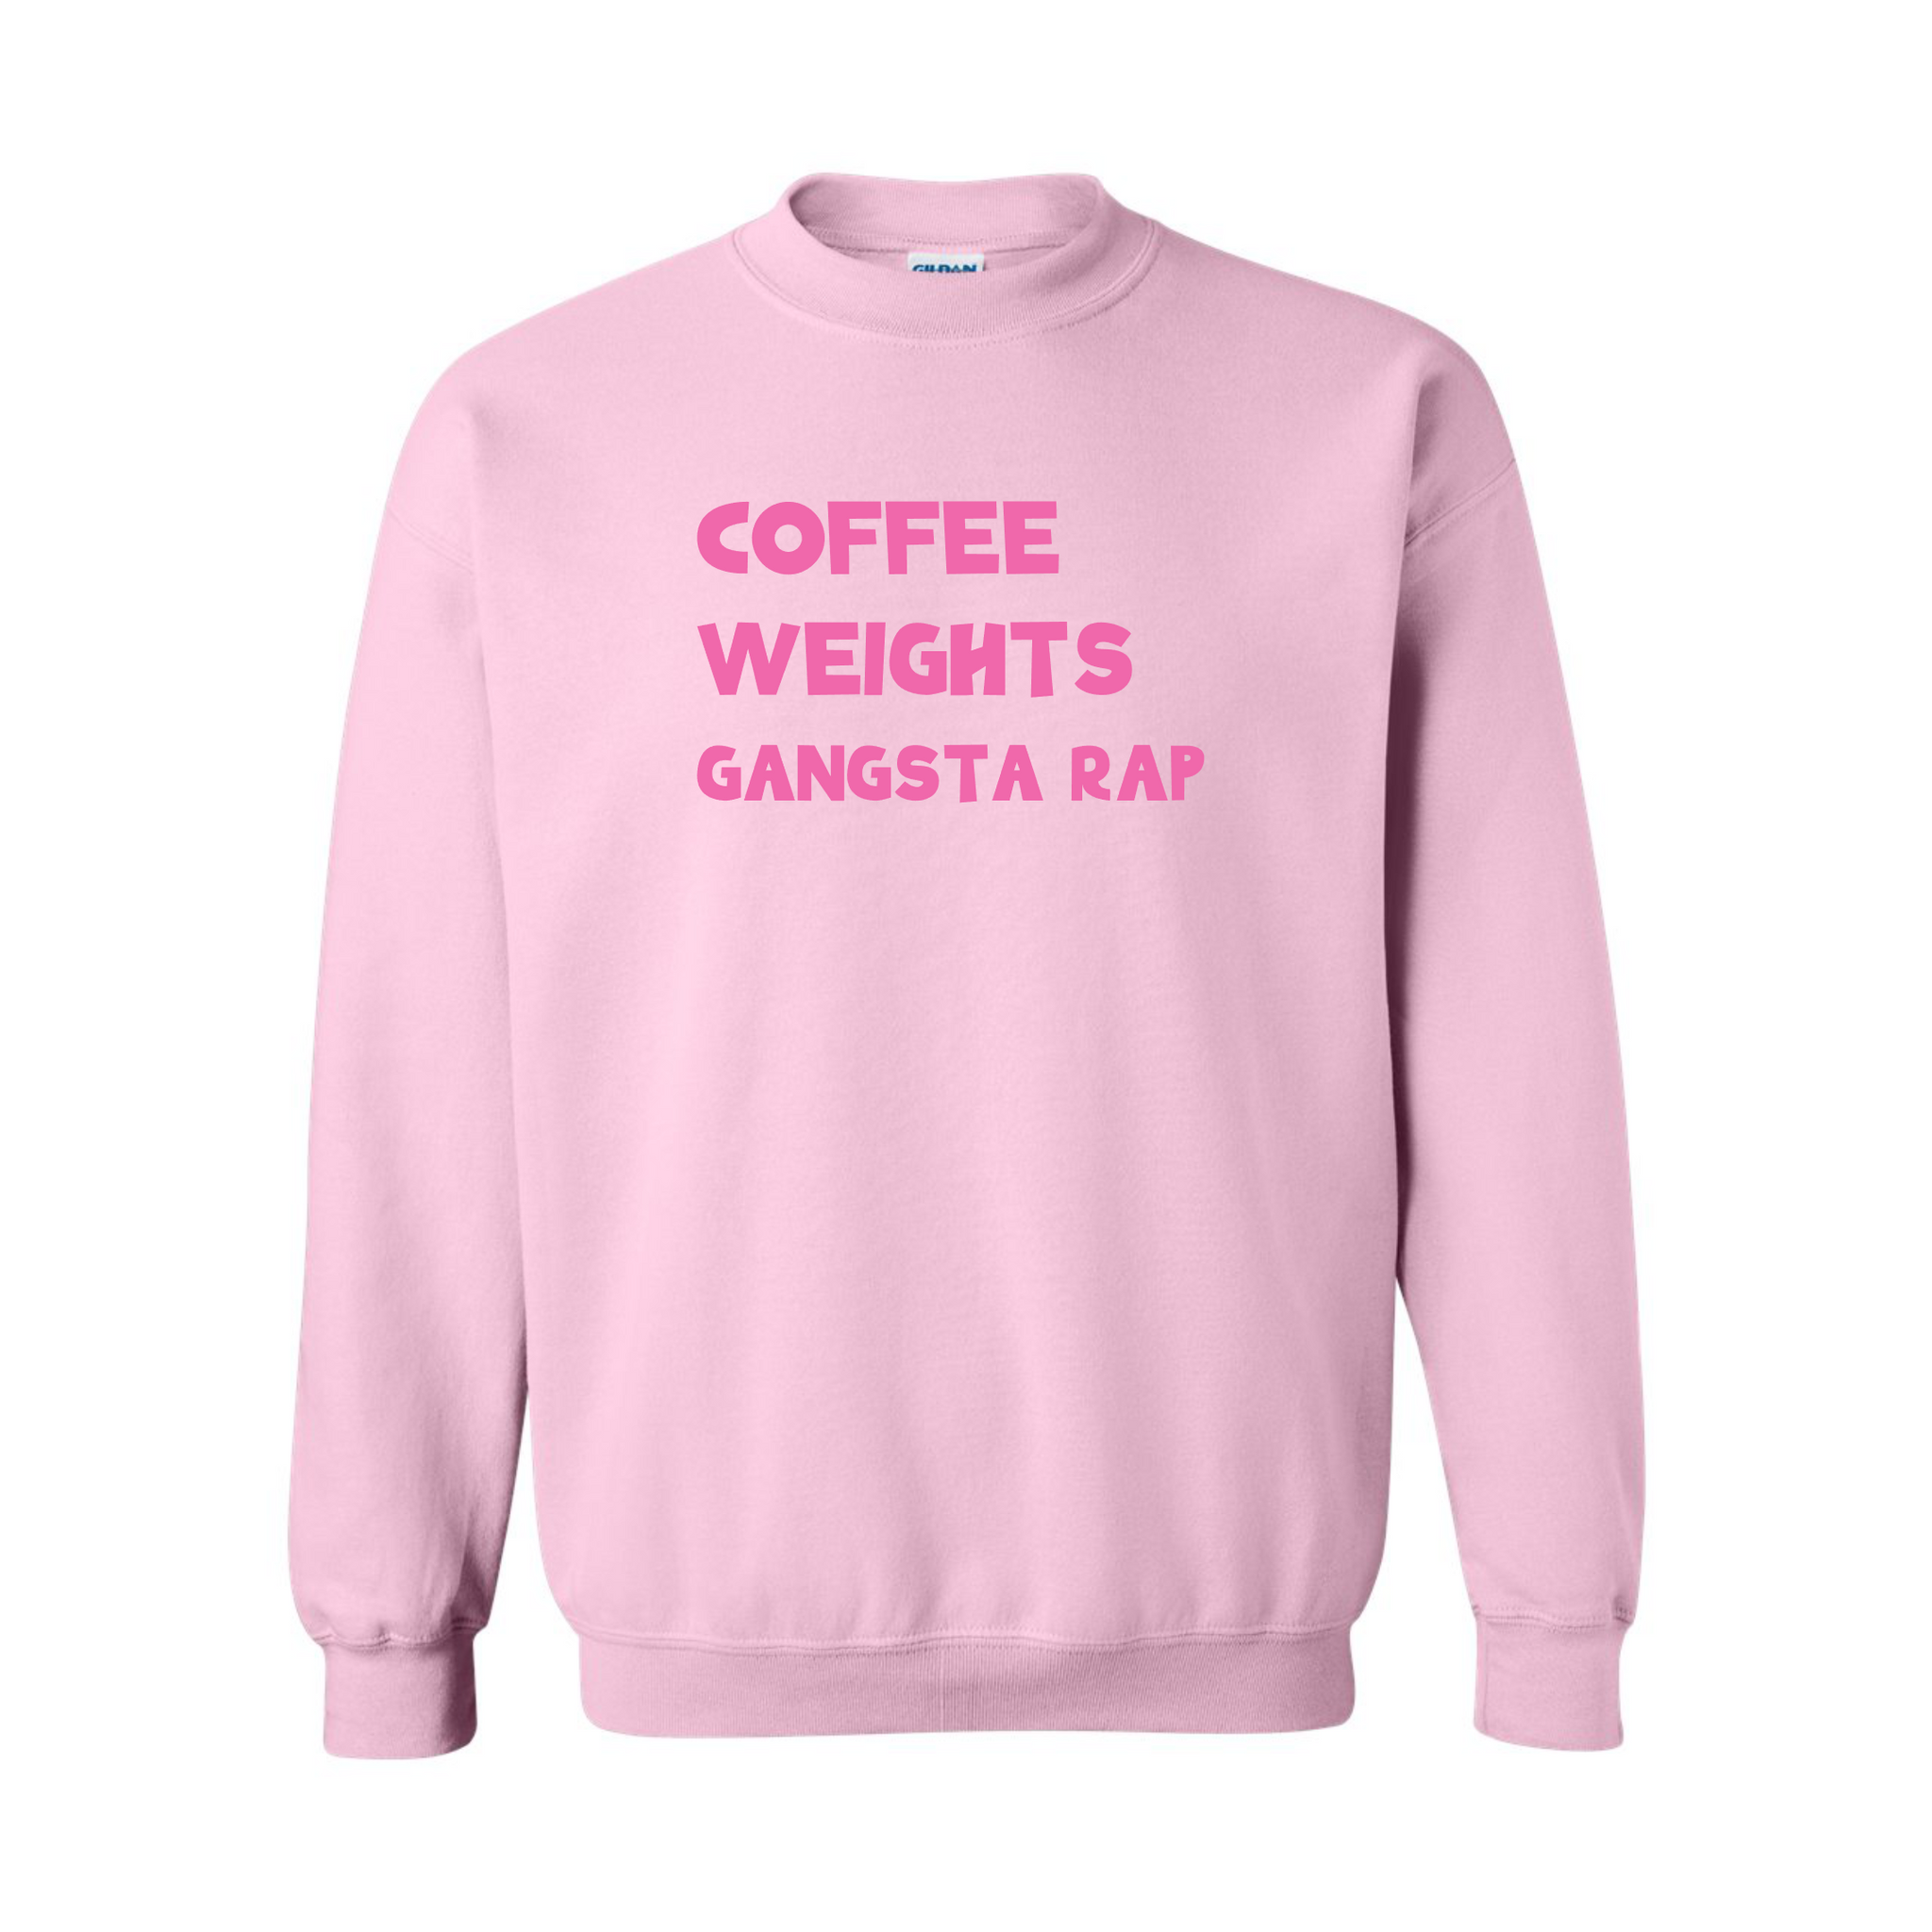 Coffee Weights Gangsta Rap - Light Pink Sweatshirt - Adult & Women's Gym Top - S004